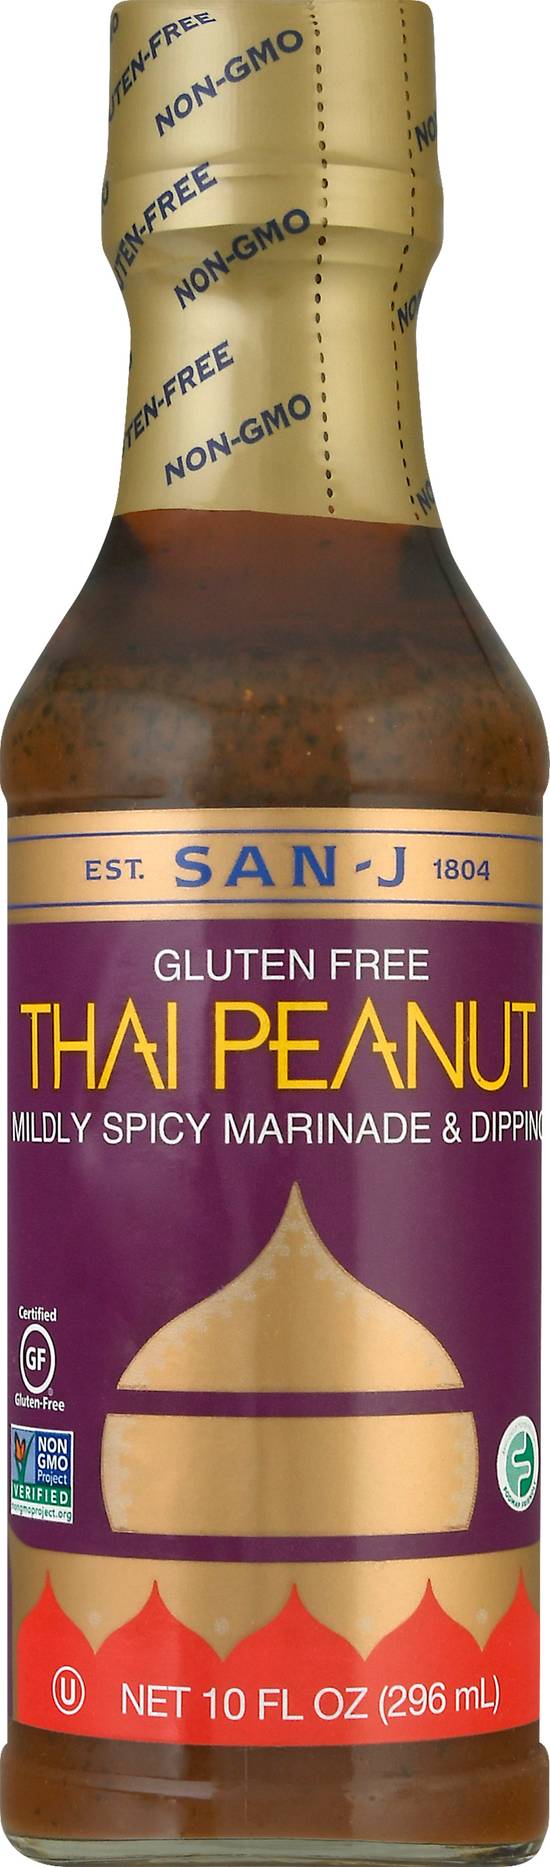 San-J Thai Peanut Mildly Spicy Marinade & Dipping